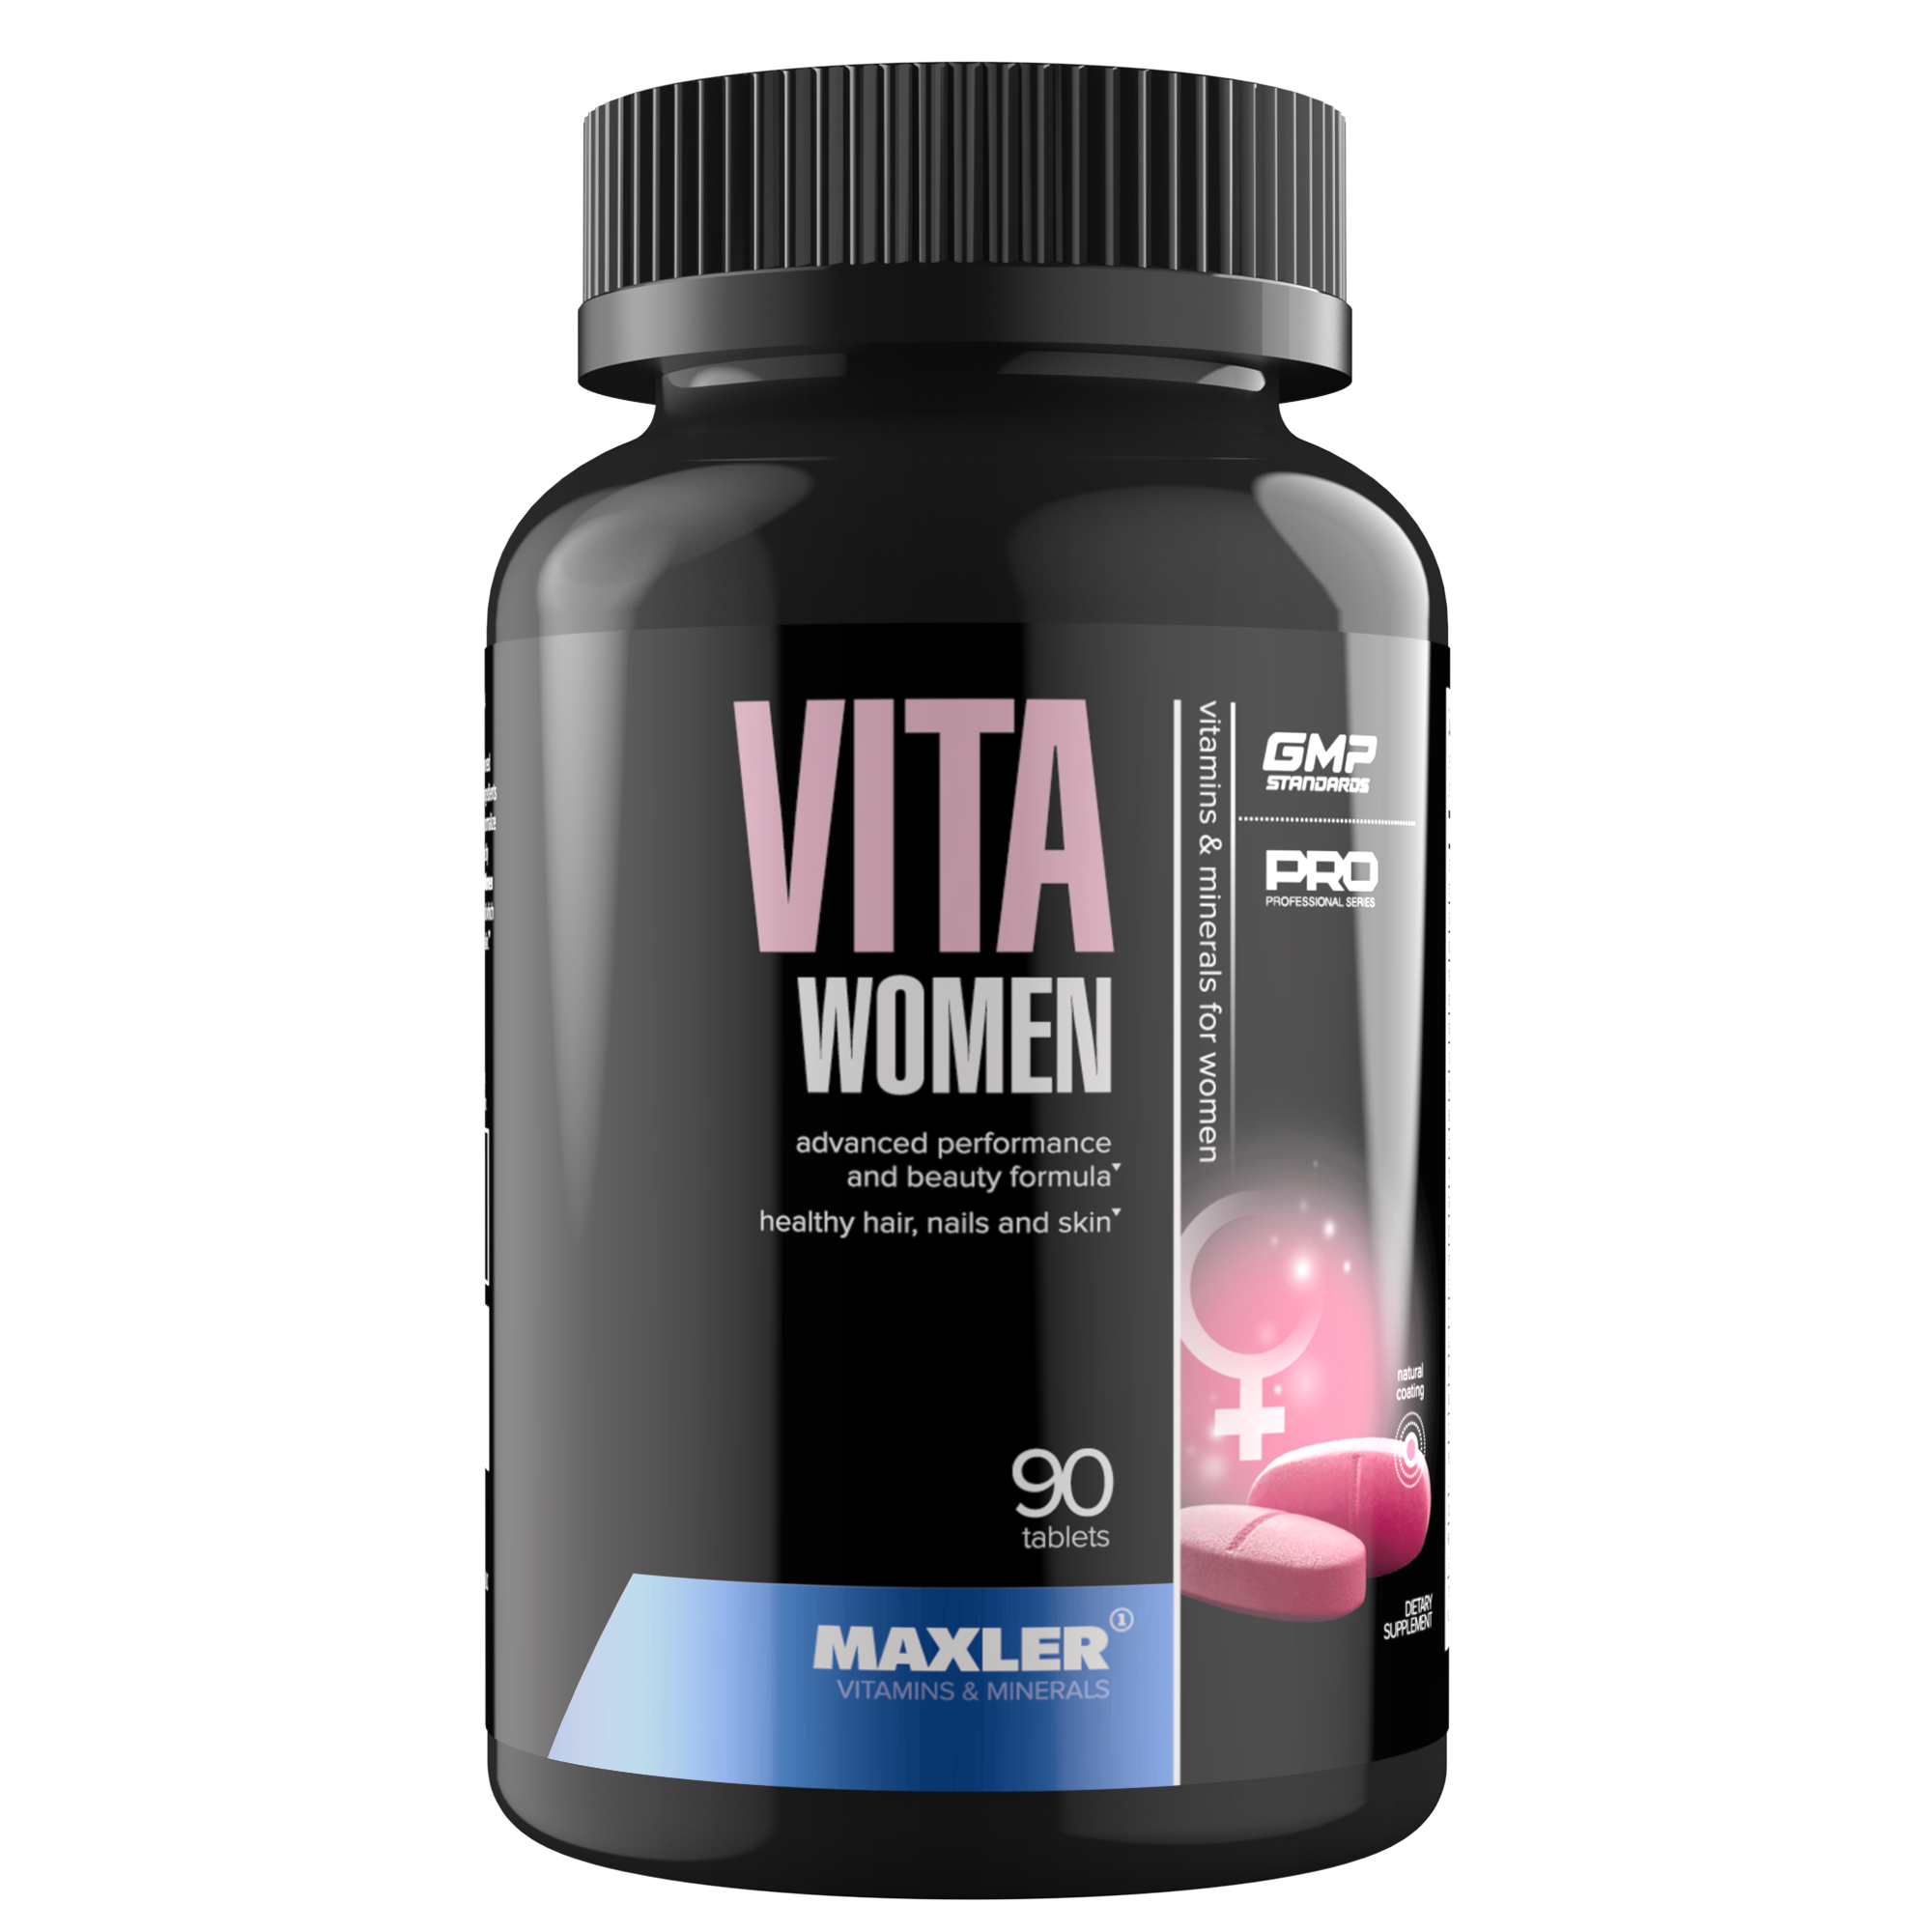 Витамины vita women от maxler